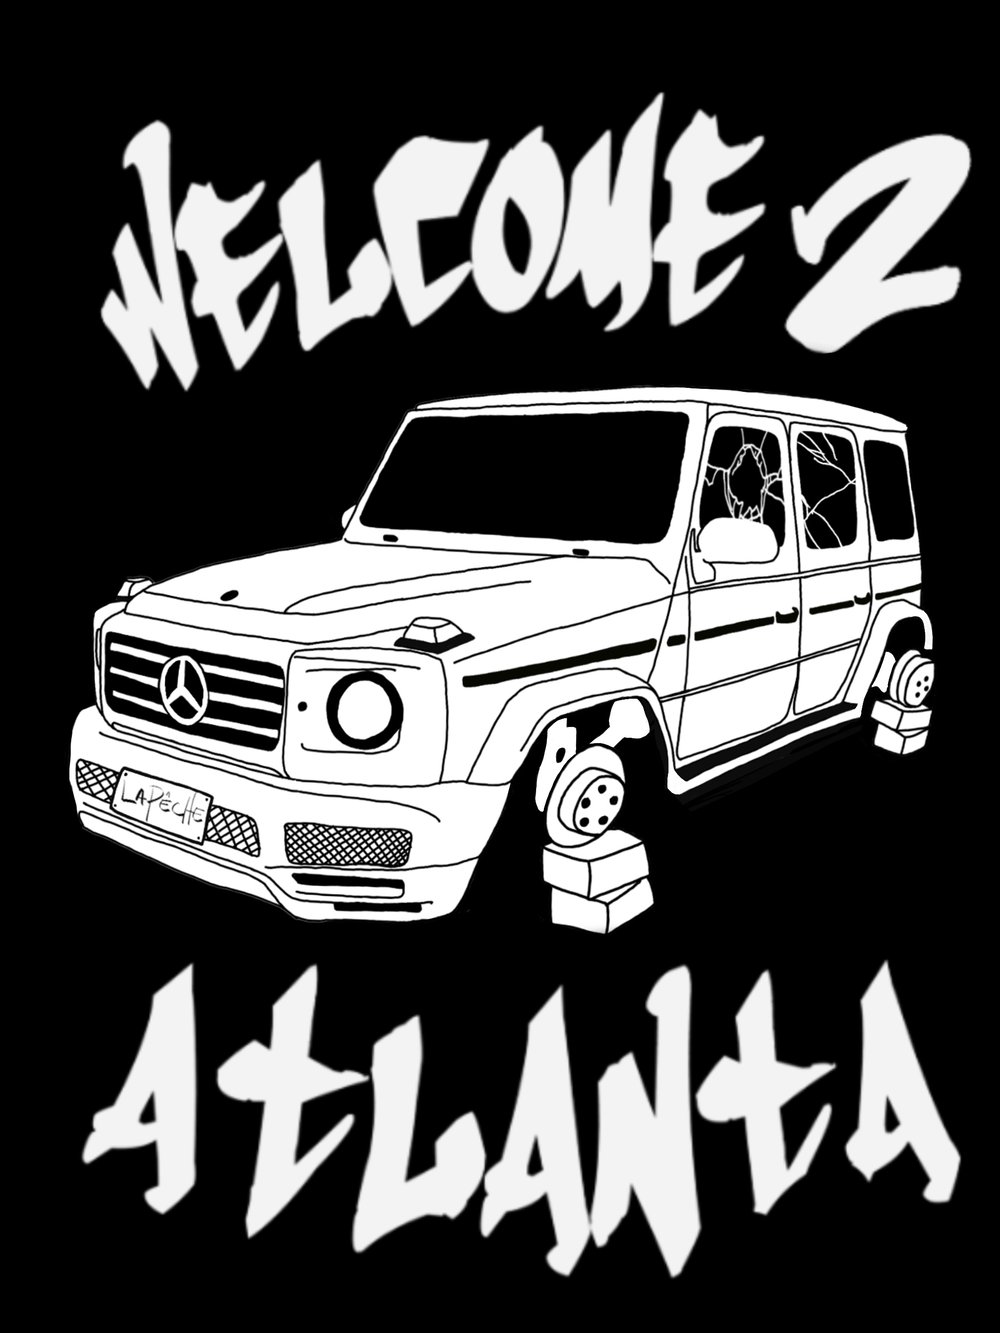 WELCOME 2 ATLANTA T-SHIRT "OG"